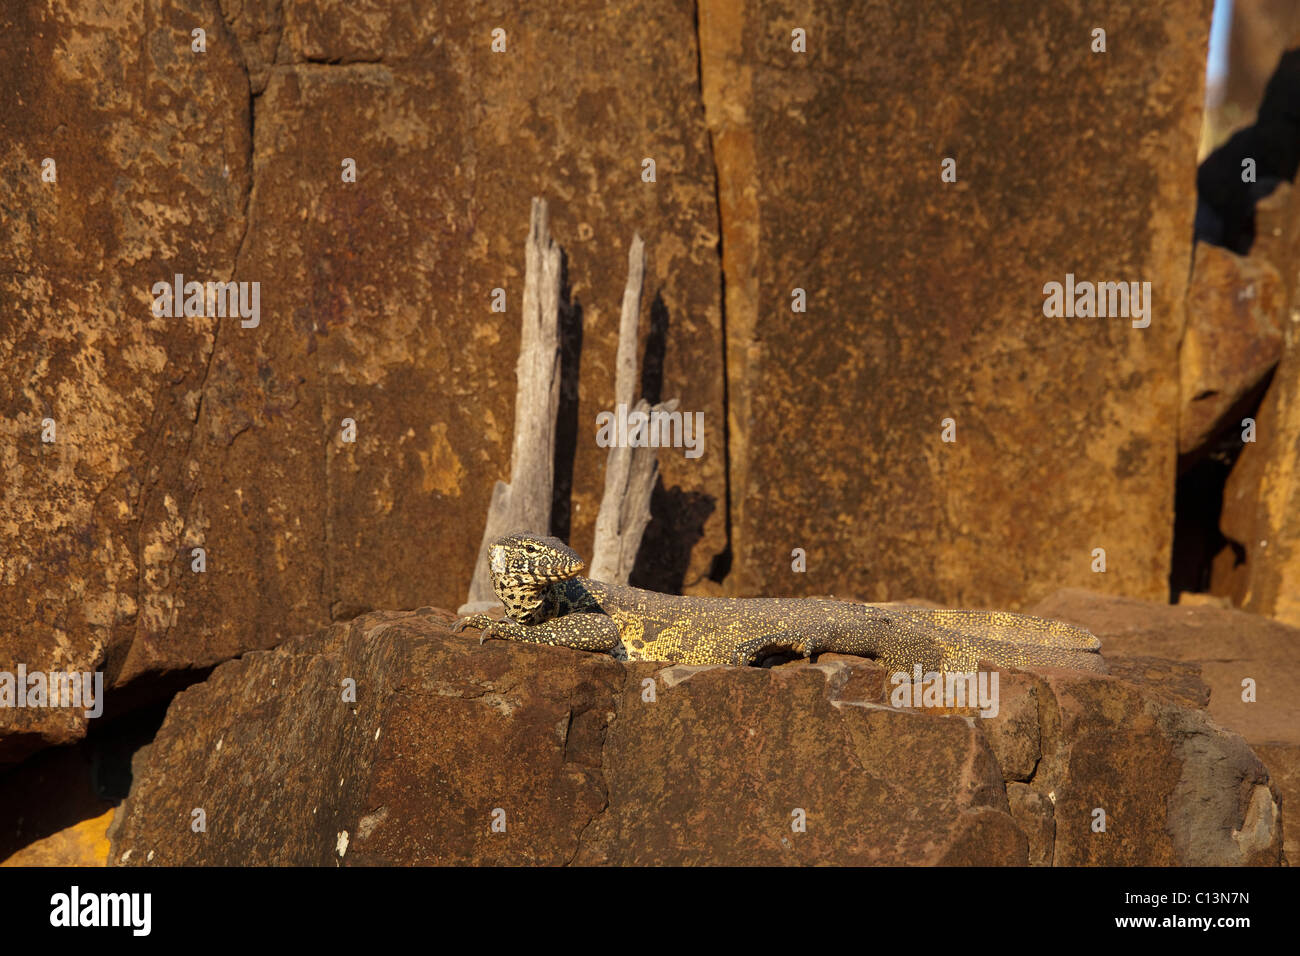 Nile Monitor (Varanus Nilotictus). Stock Photo